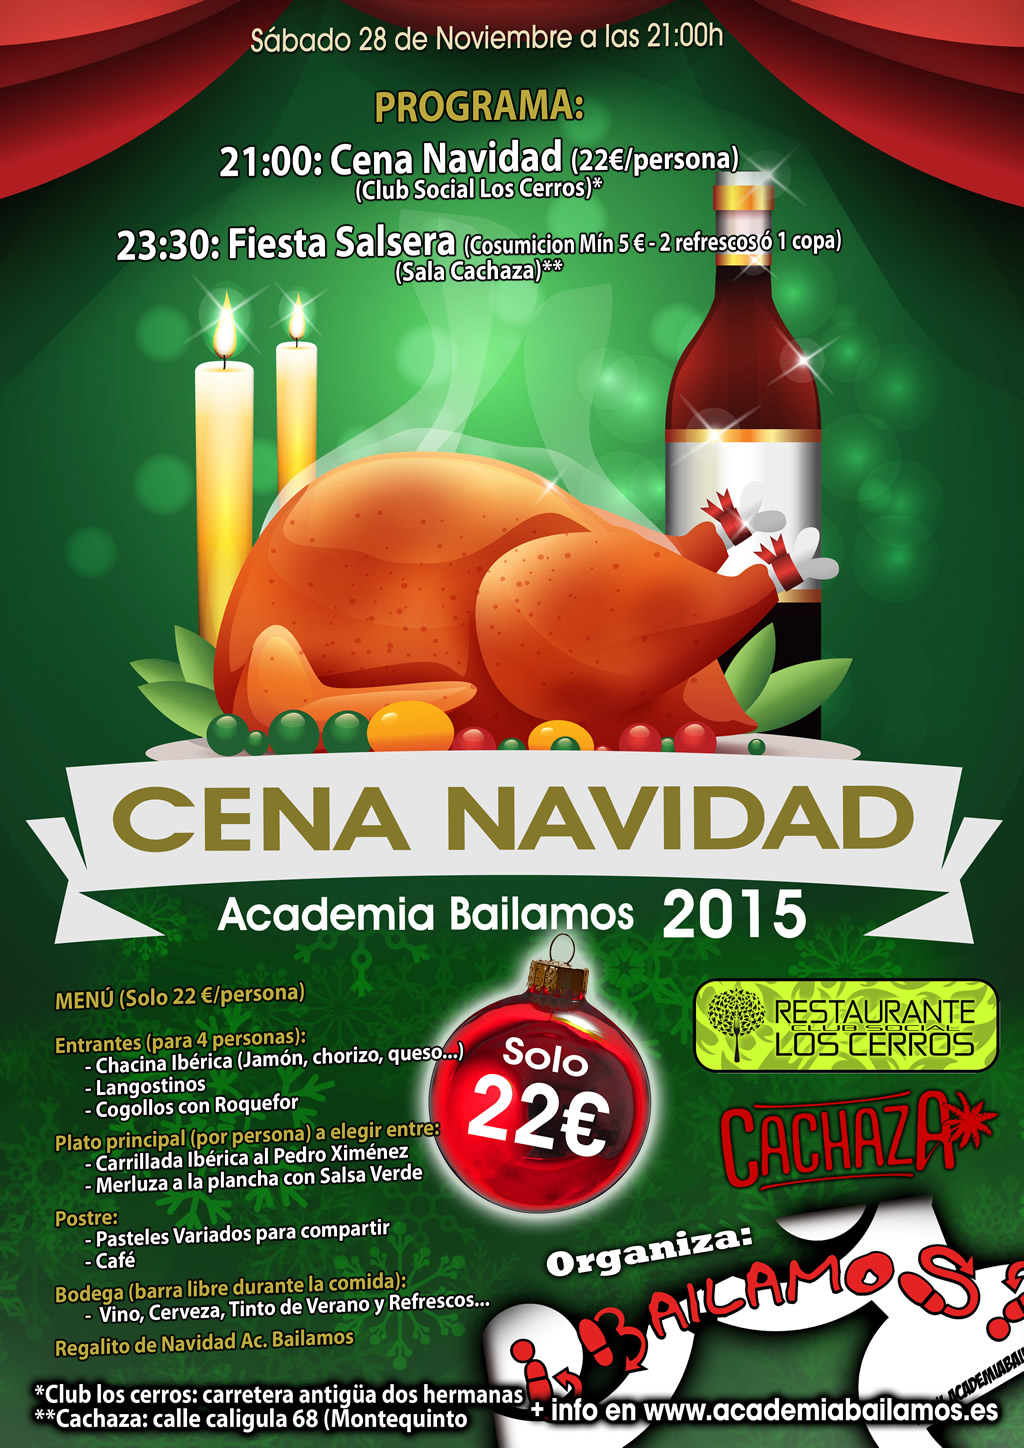 CENA-NAVIDAD-2012-acdemiabailamos-clases-de-salsa-bachata-cha-kizomba-rueda-montequinto-dos-hermanas-sevilla